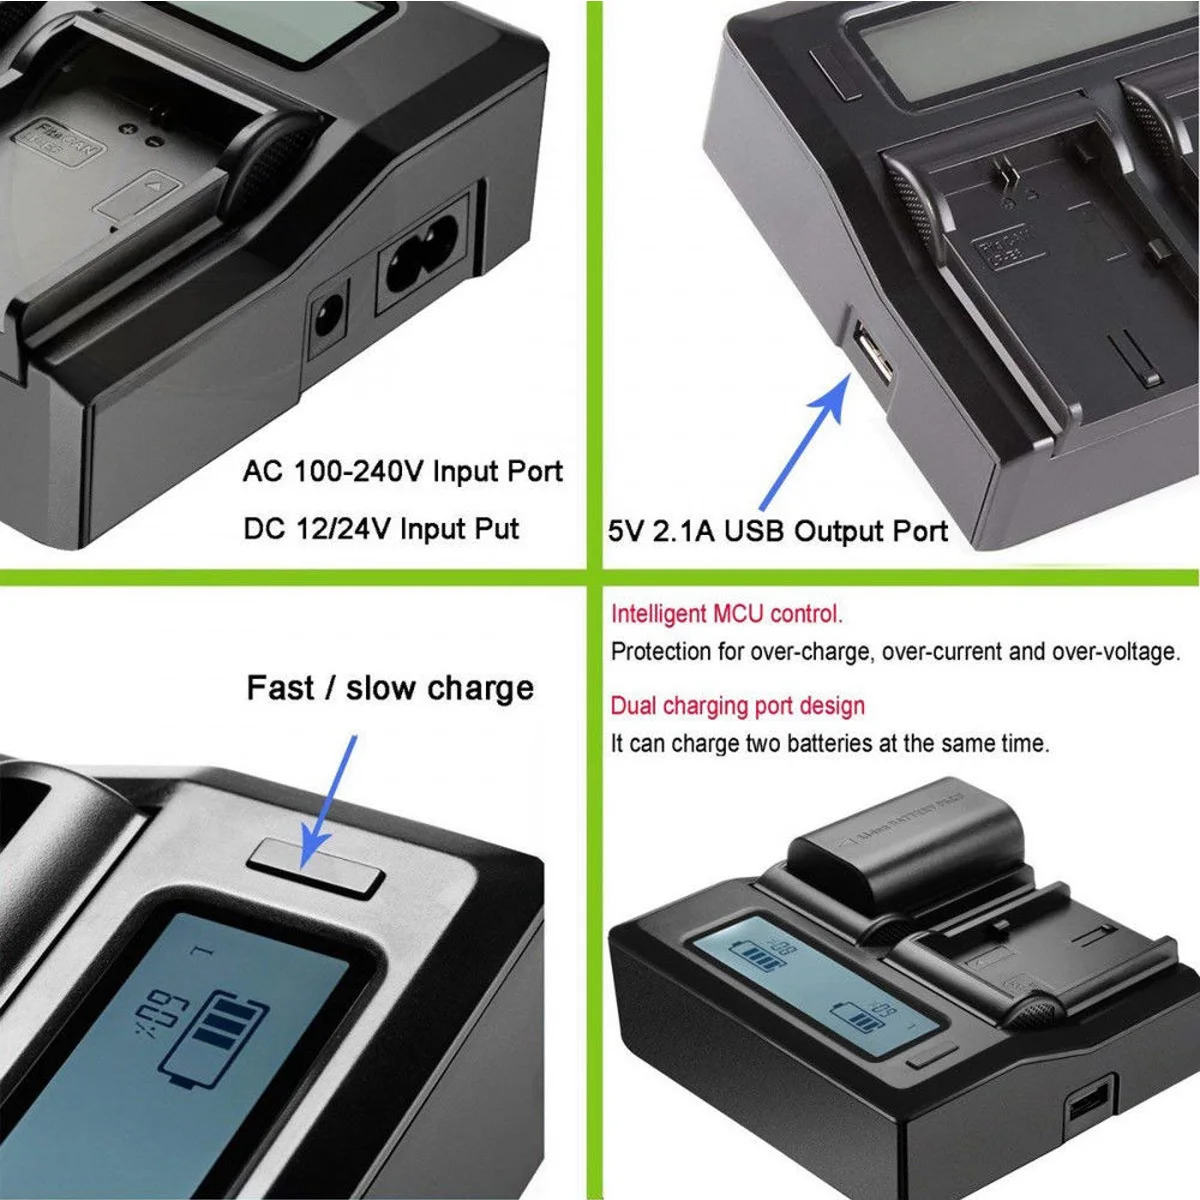 HDC-SD20 Camcorder HDC-SD9D LCD USB Battery Charger for Panasonic HDC-SD9 HDC-SD10 HDC-SD10PP 